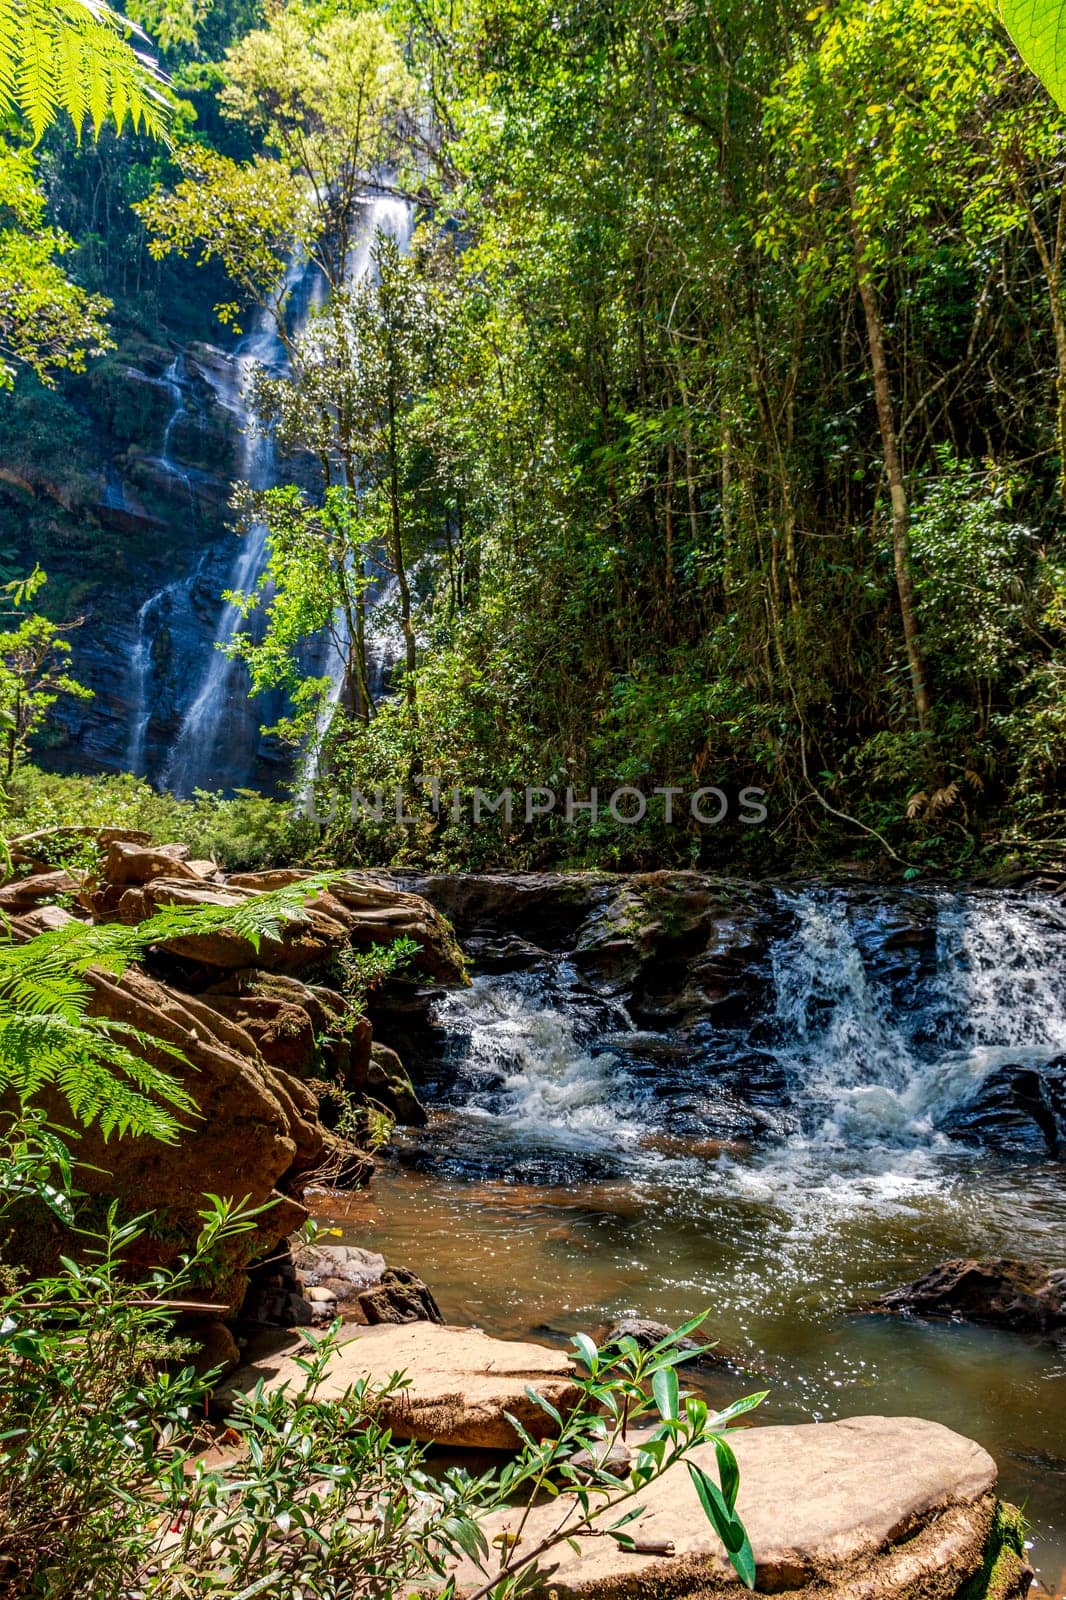 River and waterfall through dense rainforest by Fred_Pinheiro